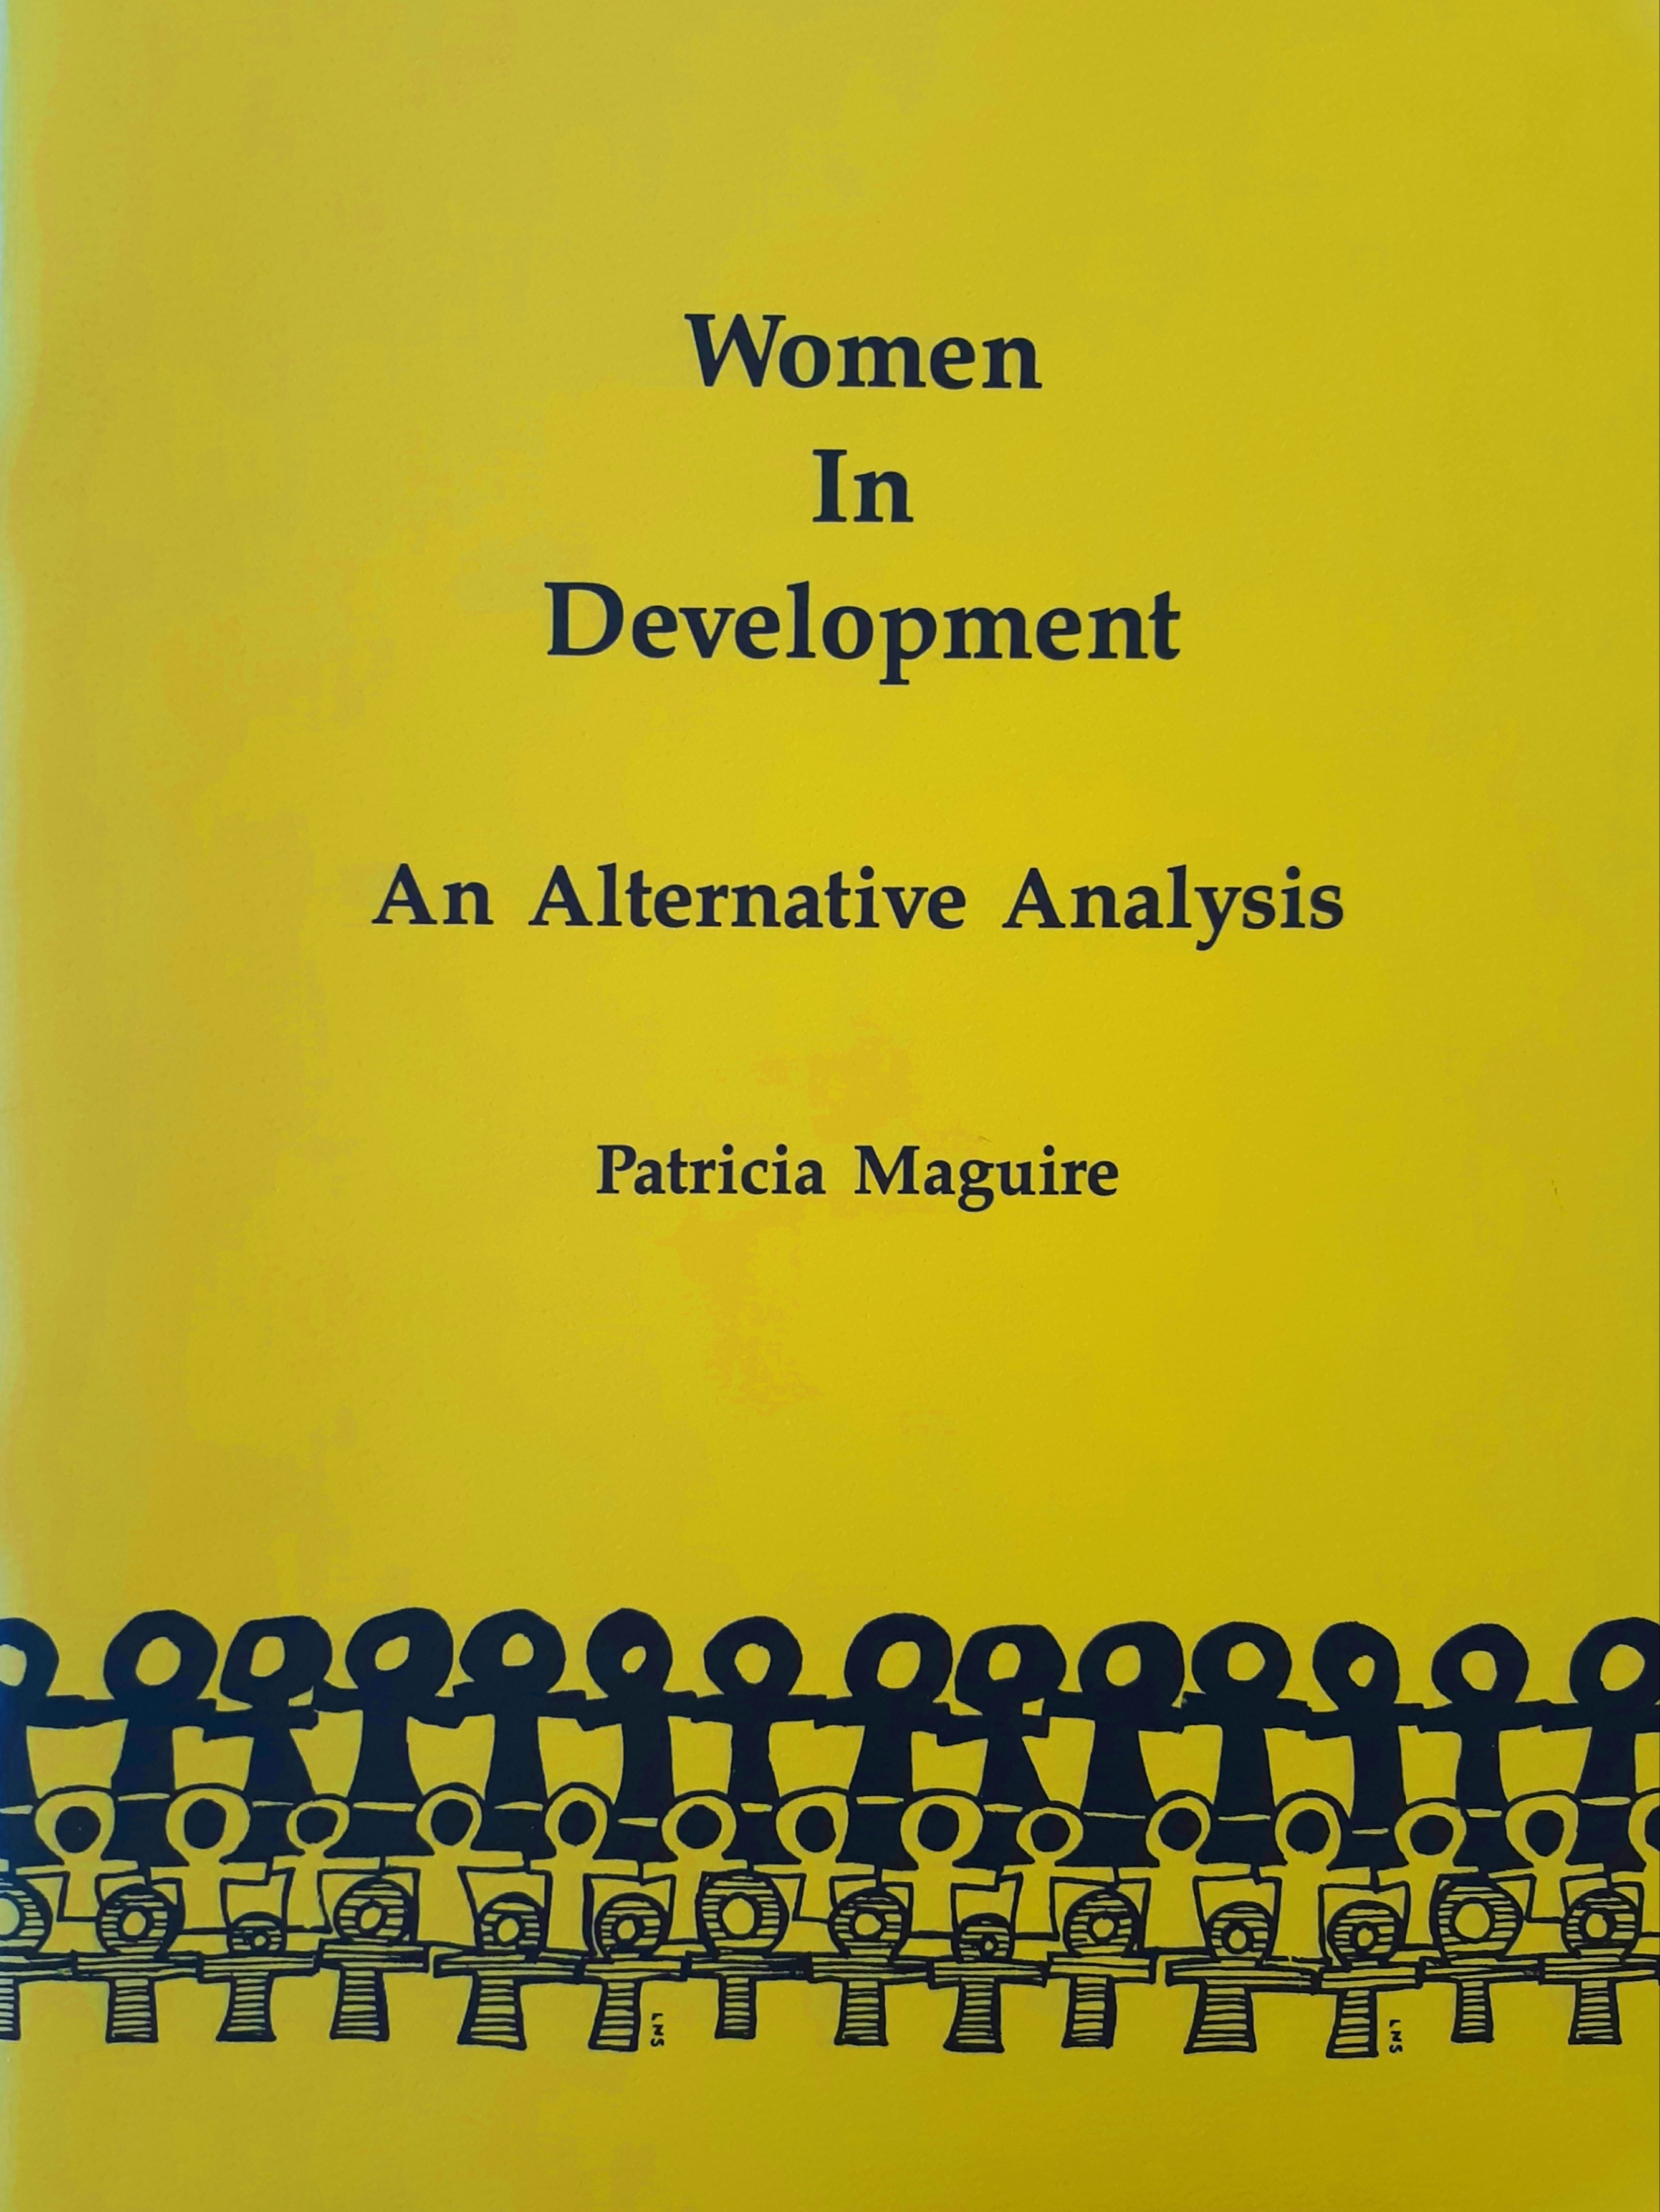 Women in development: An alternative analysis